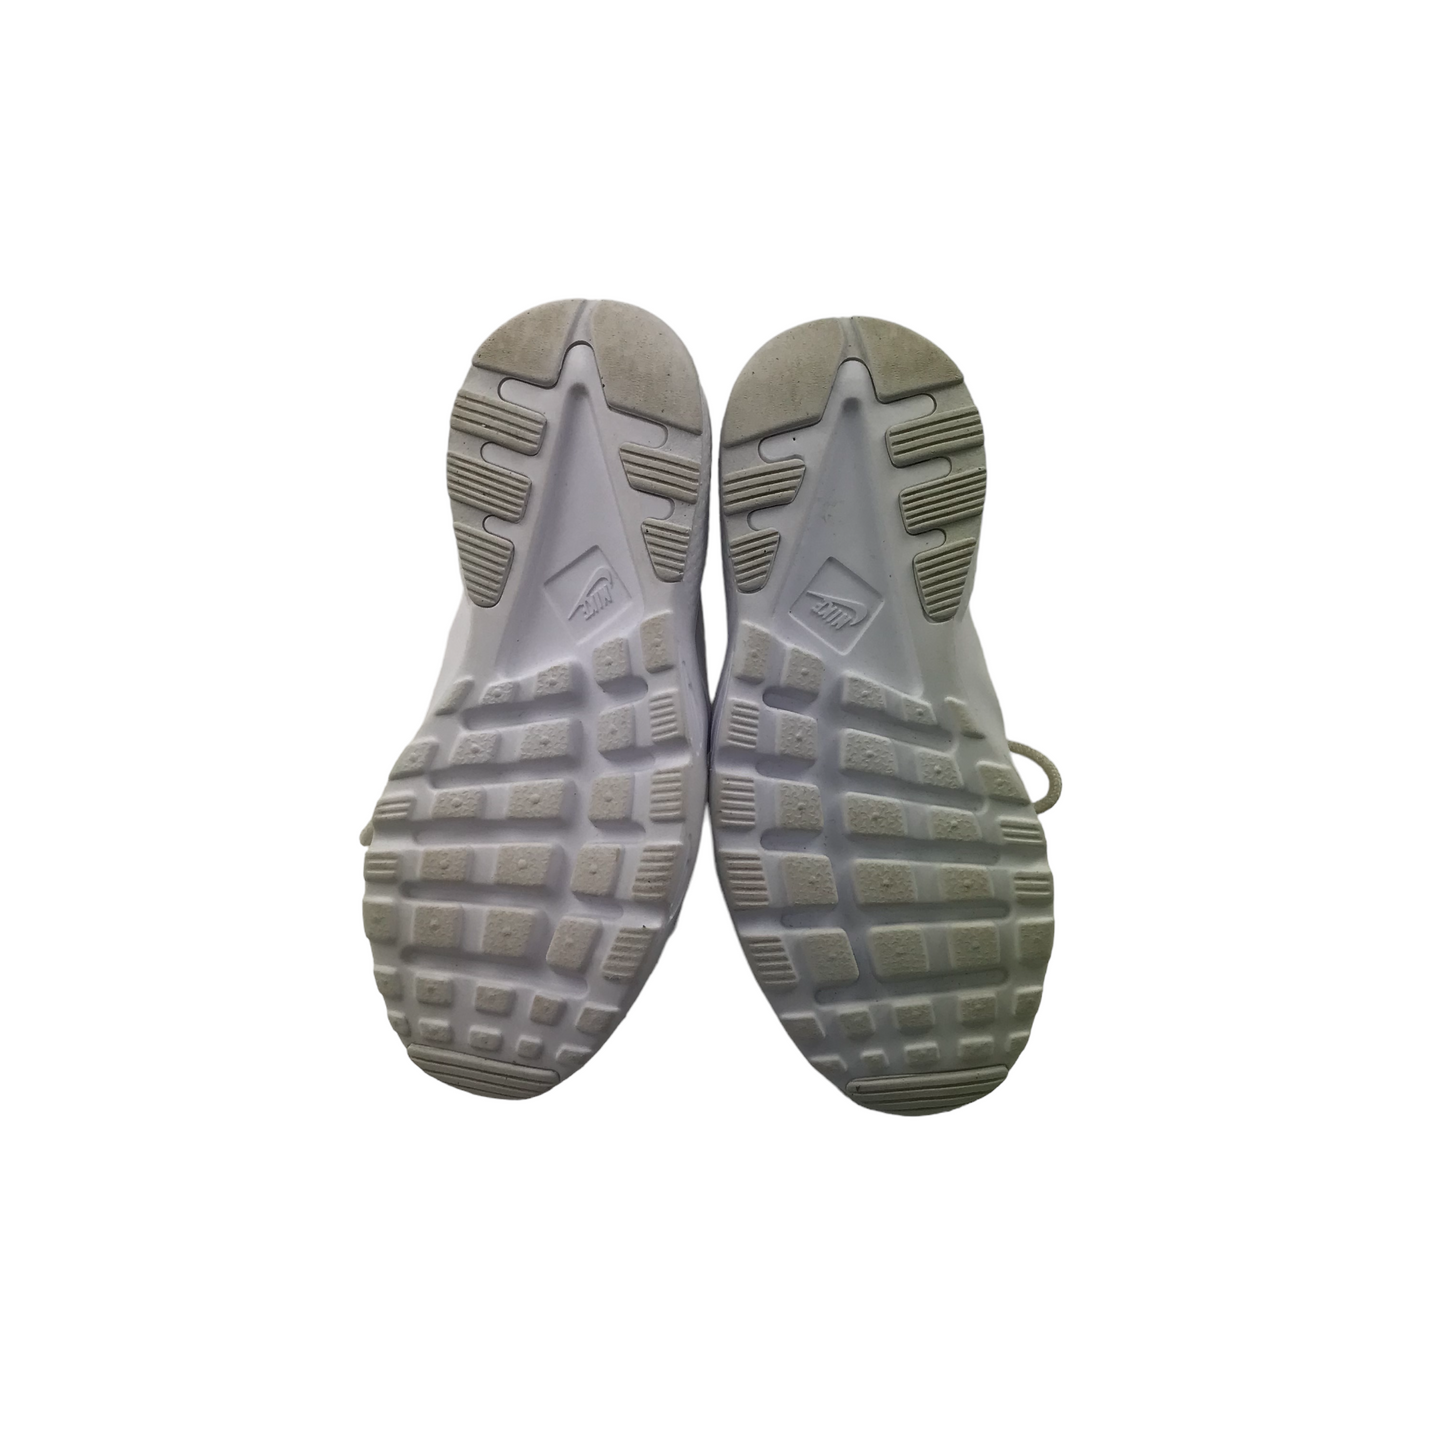 Nike Air Huaranche White Trainers Shoe Size 10.5 junior